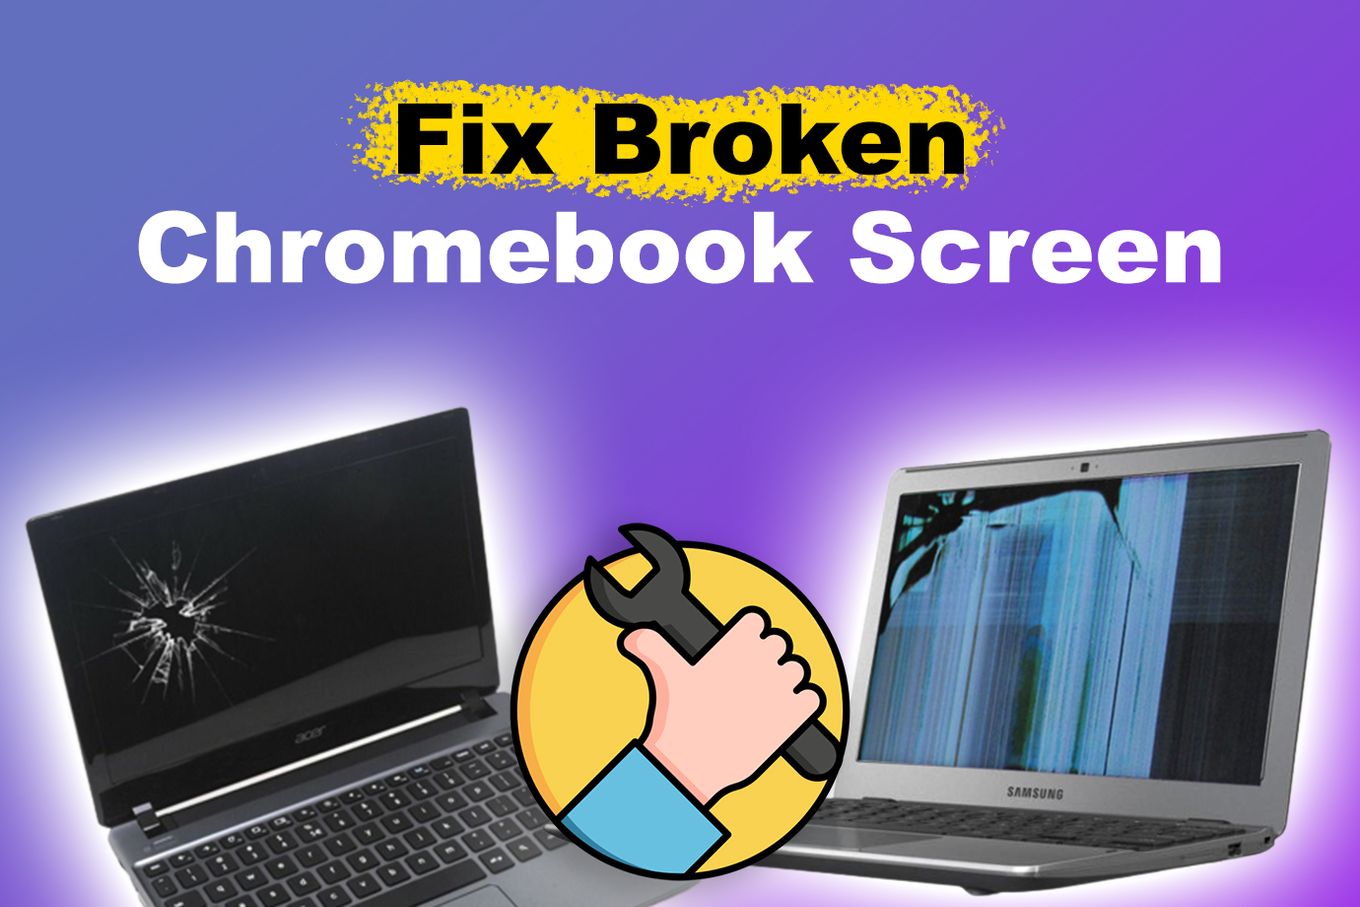 Fix Broken Chromebook screen